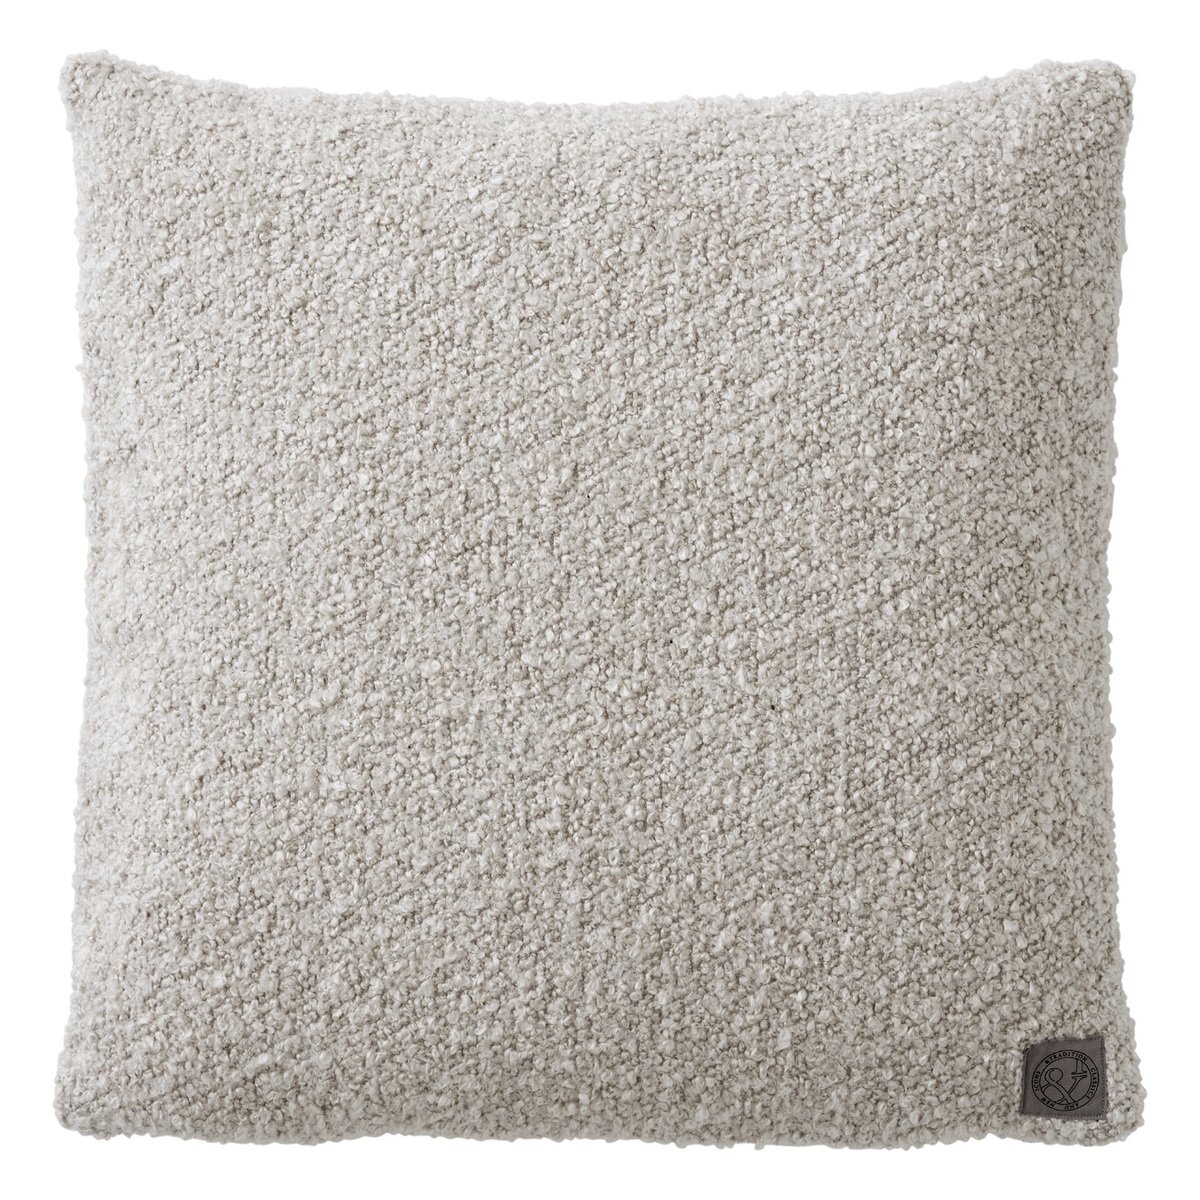 Modular Floor Pillows: Creative Connectable Cushions